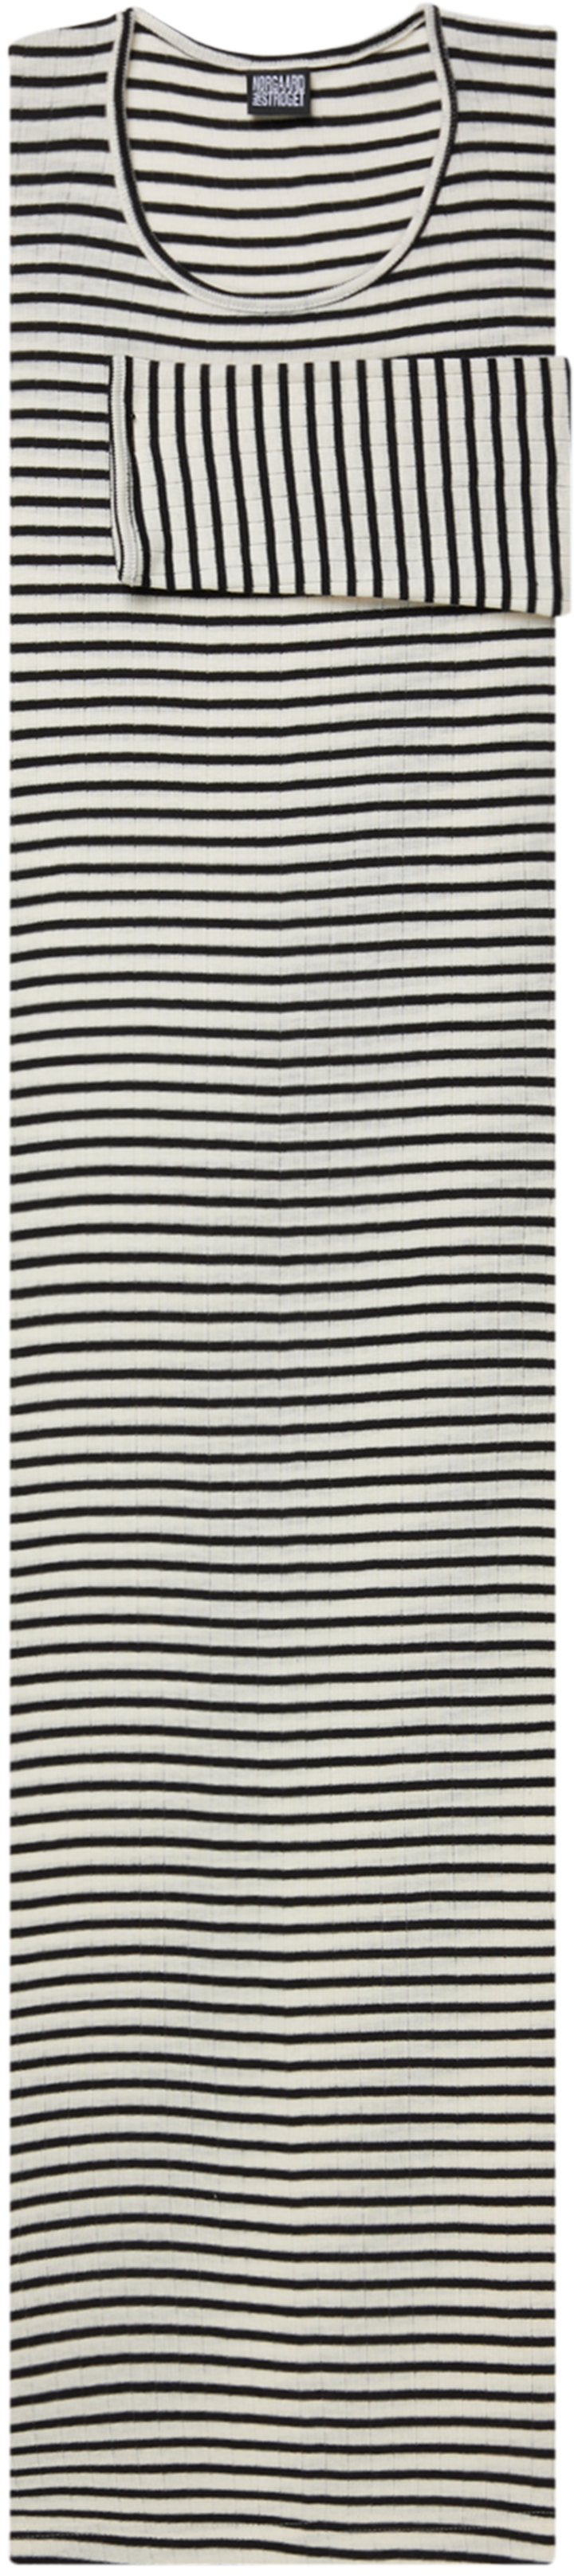 NPS John Dress NPS Stripes, Ecru/Black